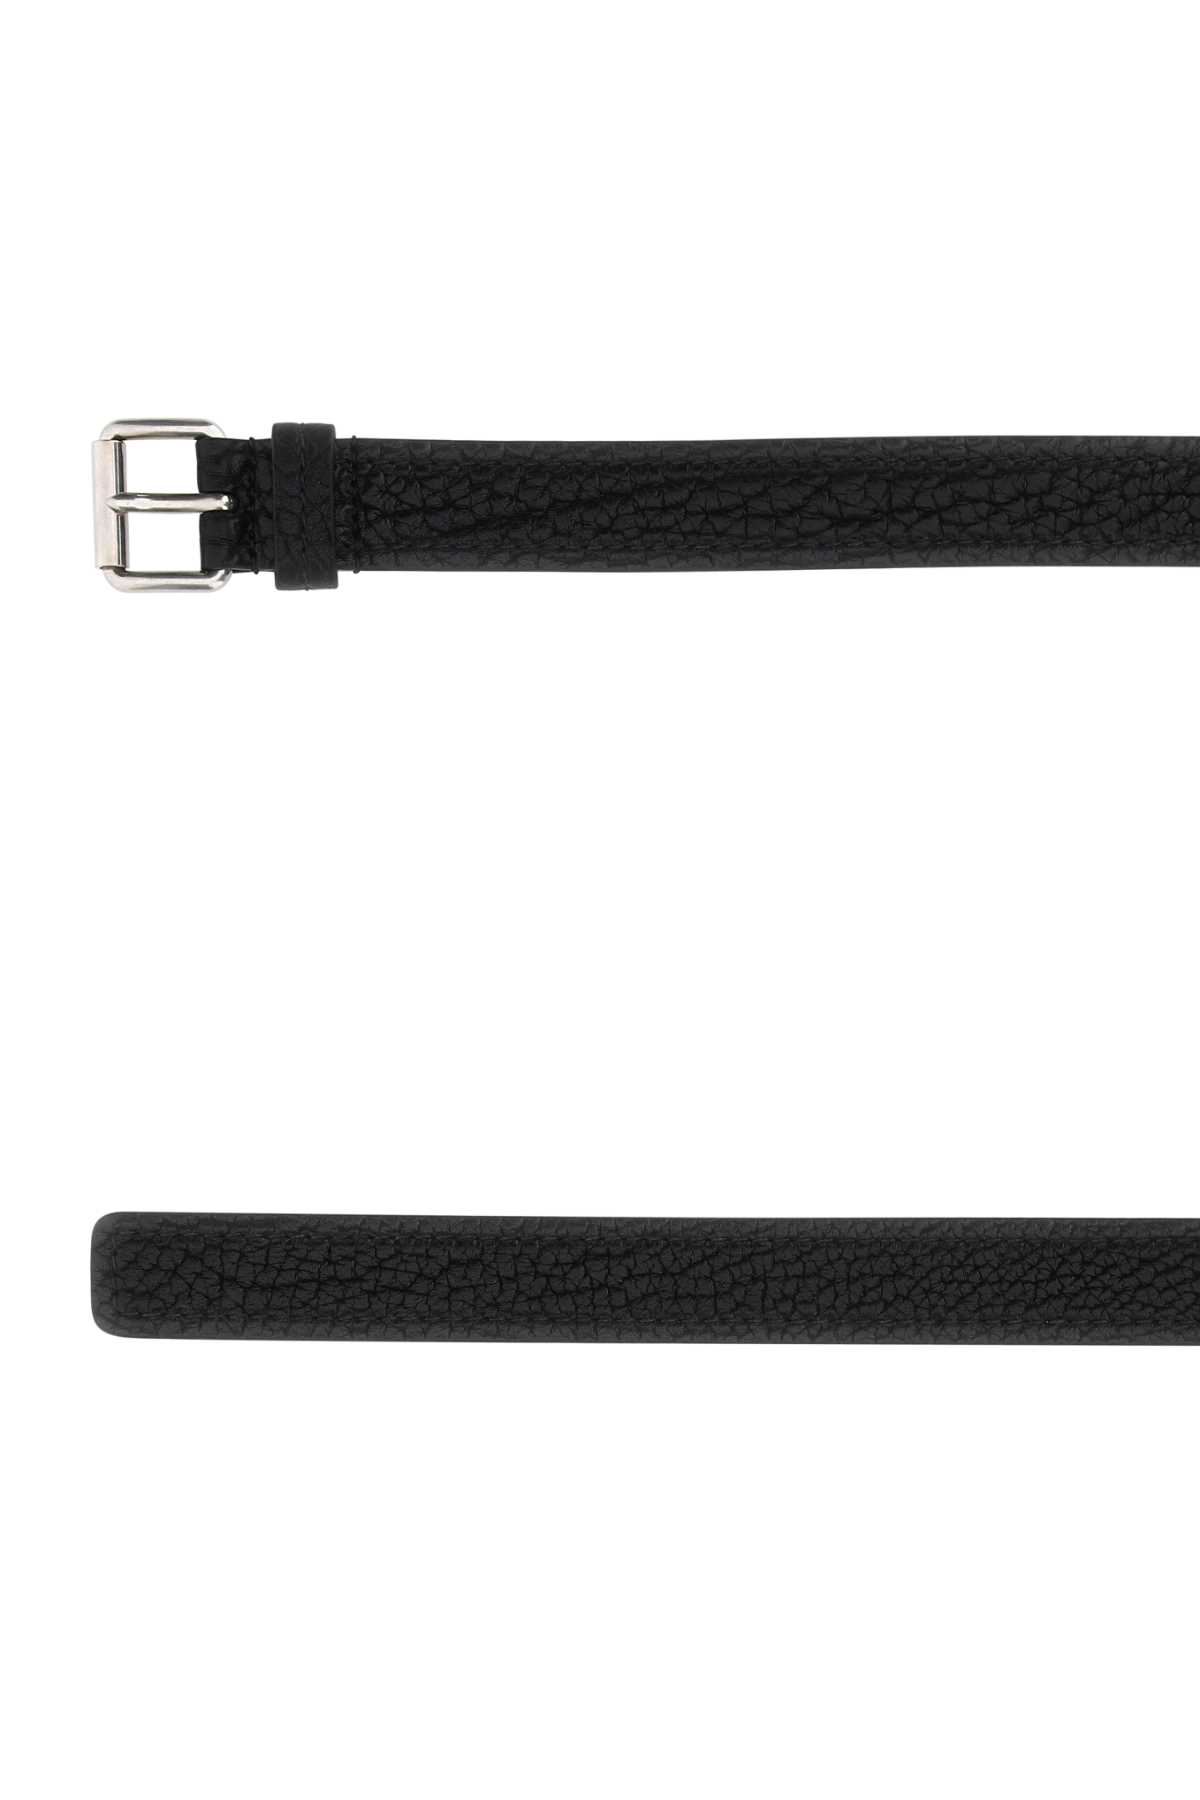 Prada Black Leather Belt In F0002